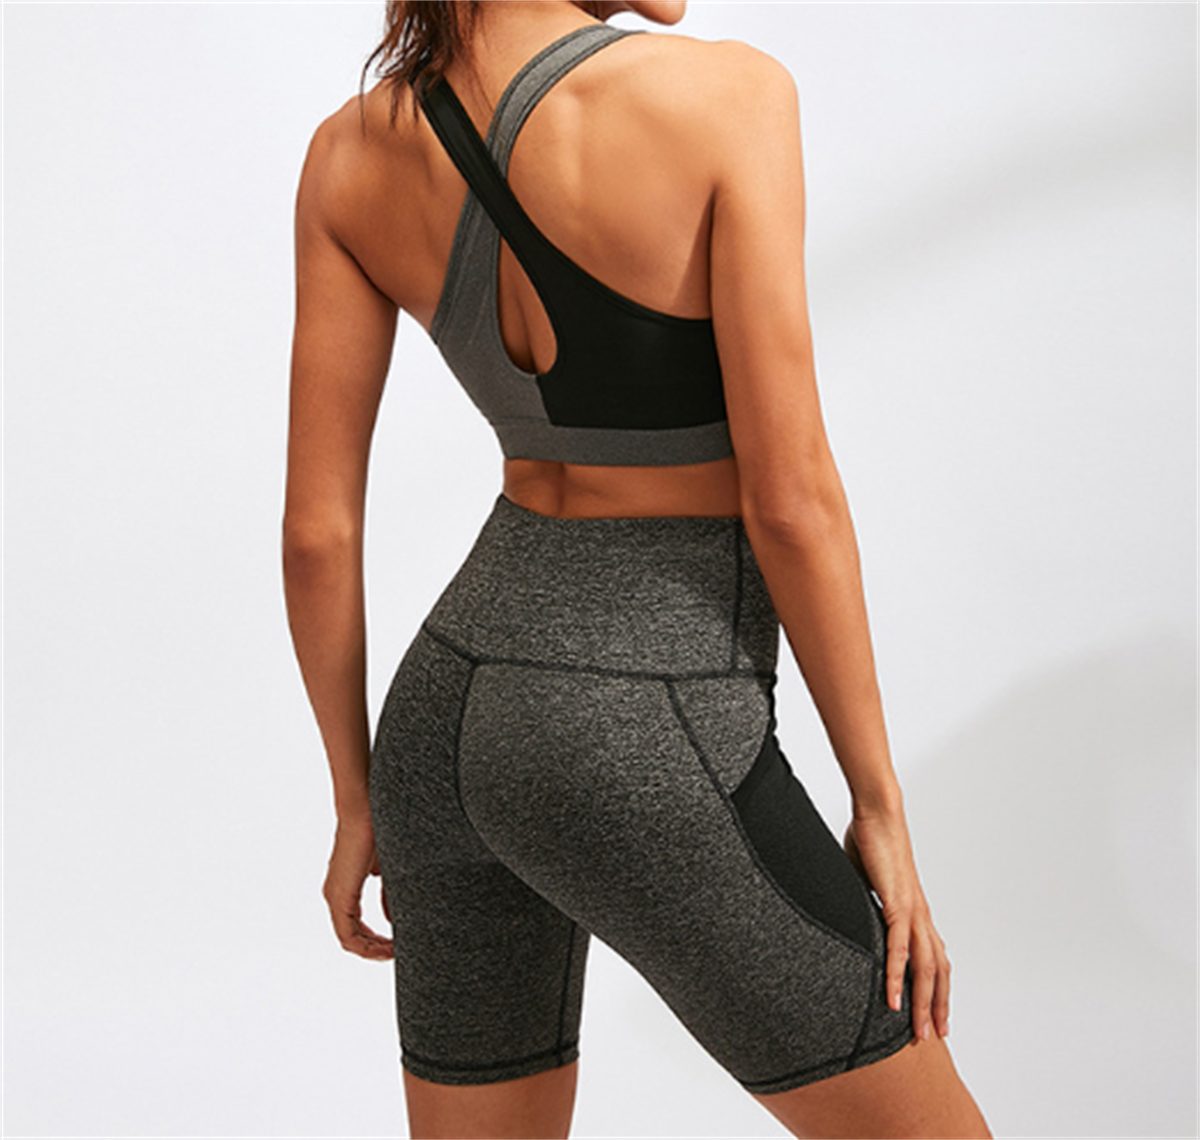 Damen-Shorts schnell carefully trocknend hoher Yogashorts Stretch, Taille, grau mit selected Netztasche,